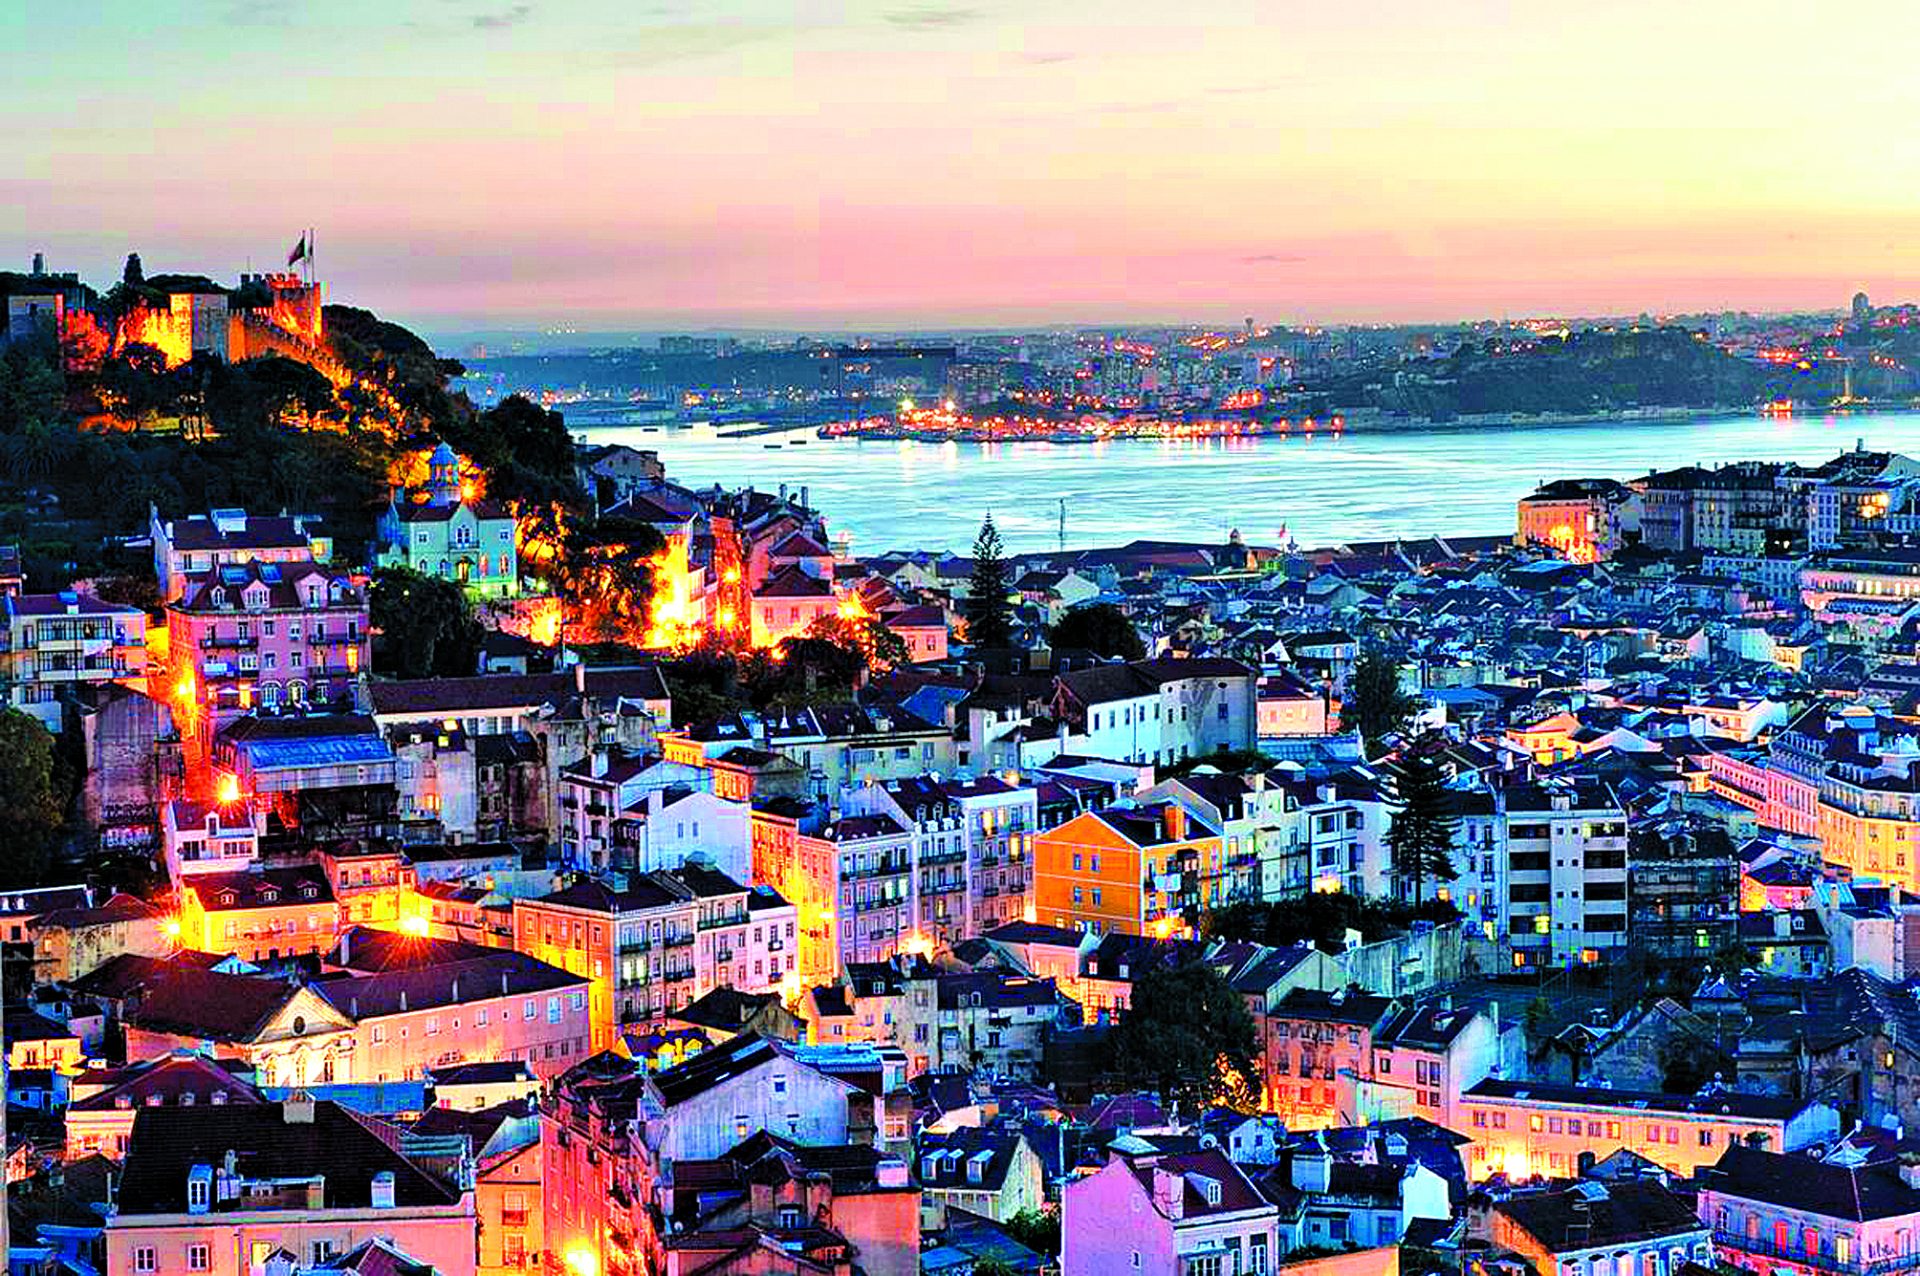 Lisboa vai candidatar bairros históricos a património da UNESCO até 2018